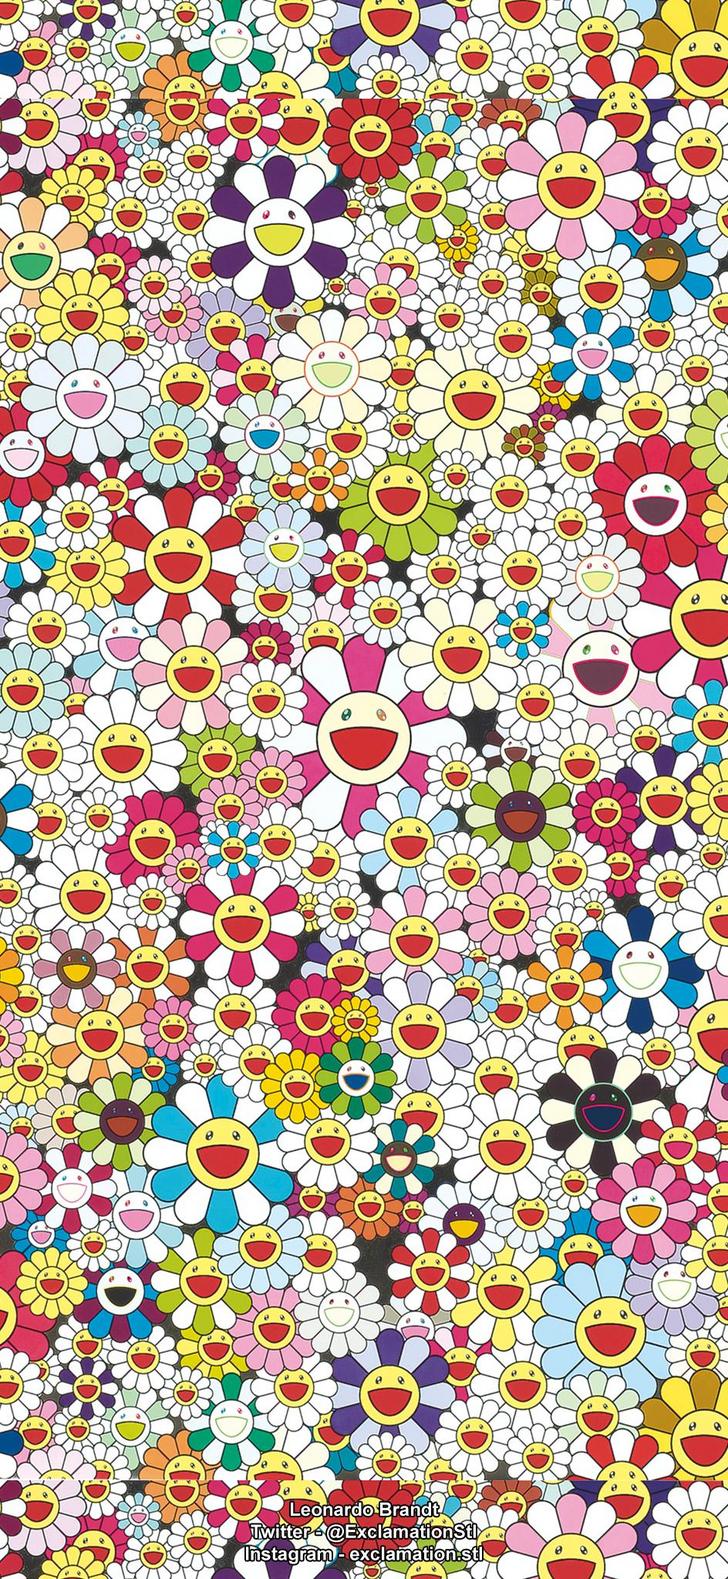 Takashi Murakami Wallpaper (Works best with iPhone 11 IOS14)